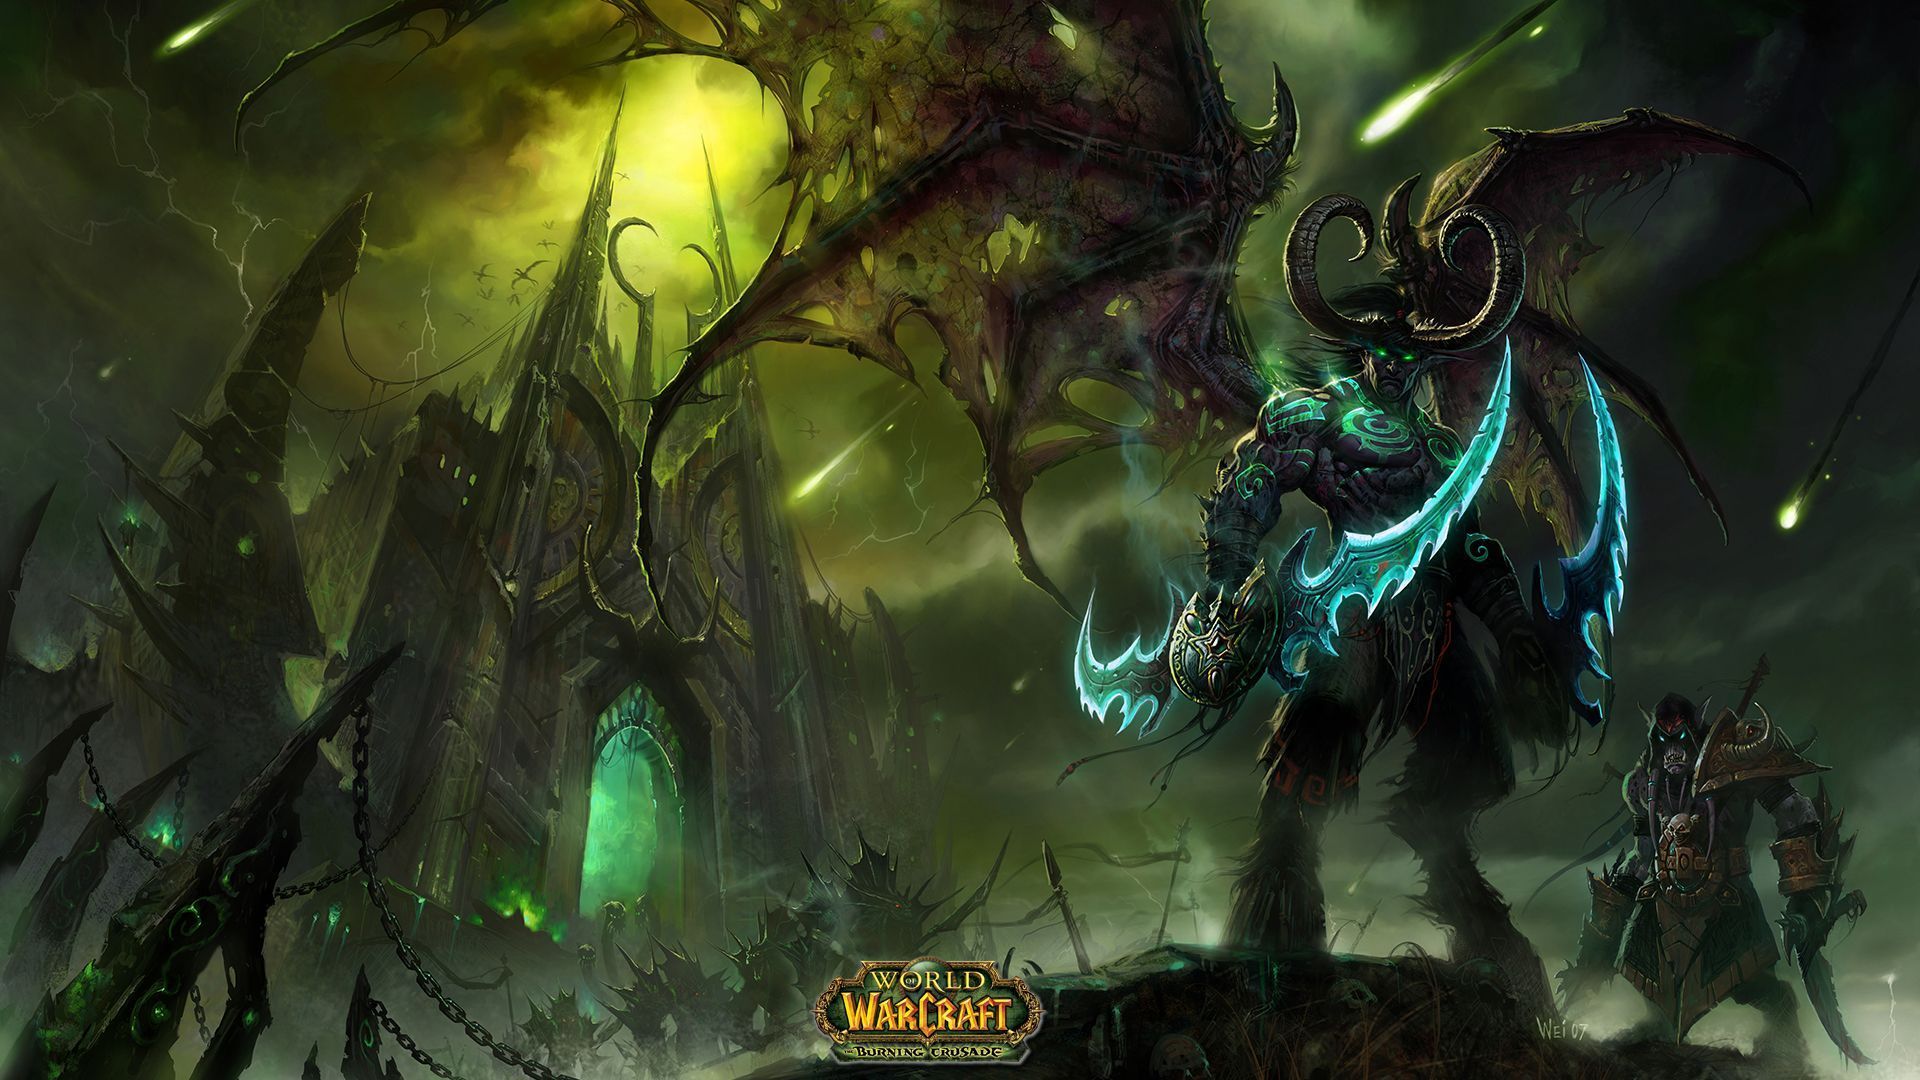 World Of Warcraft HD Wallpaper 1920x1080 ID19983